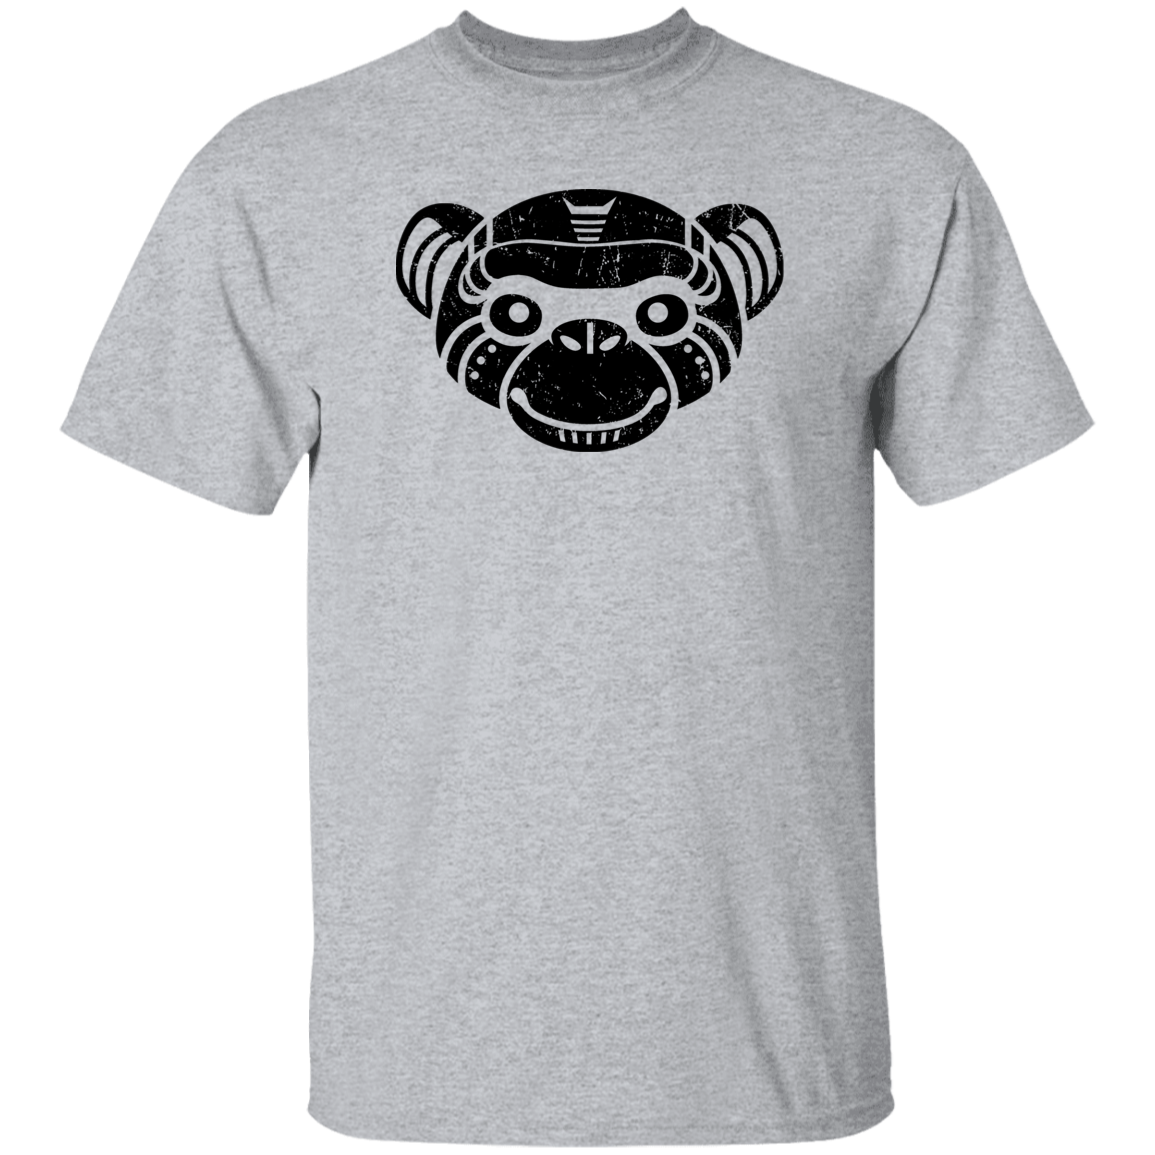 Black Distressed Emblem T-Shirt for Kids (Monkey/Fix)